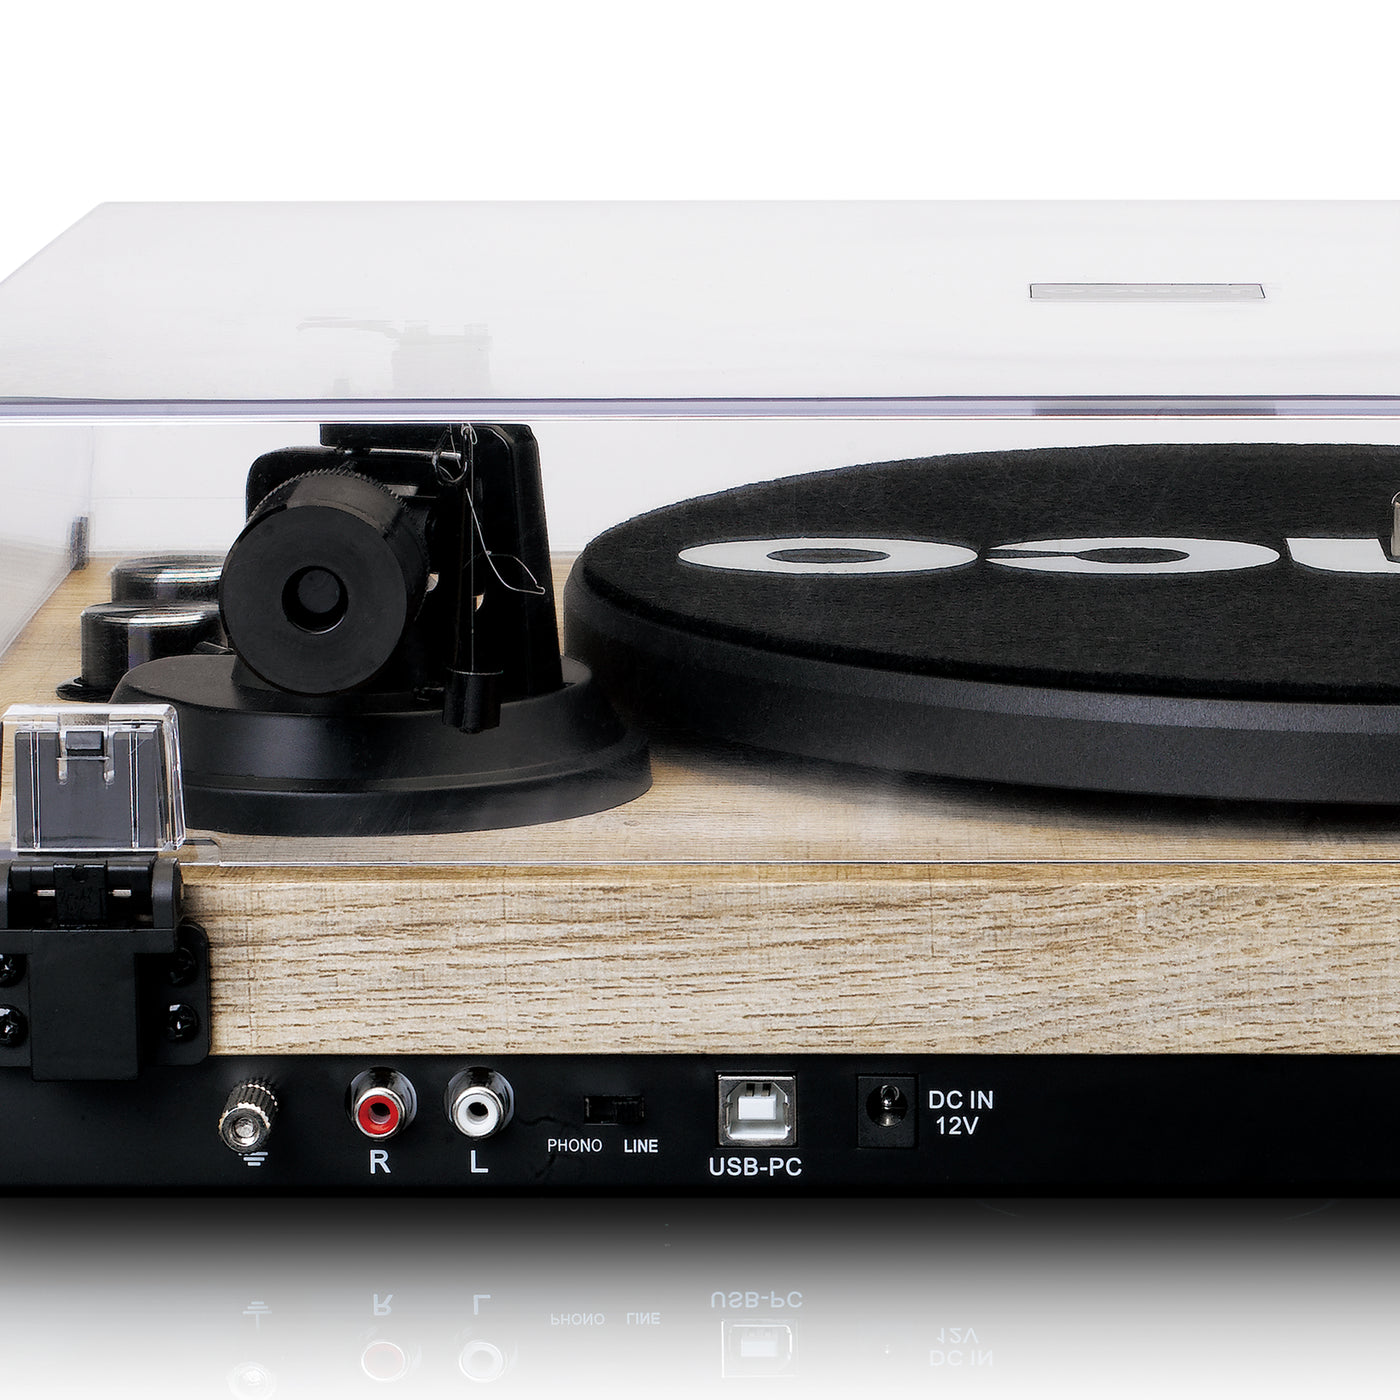 LENCO LBT-188PI - Record Player with Bluetooth® transmission, wood